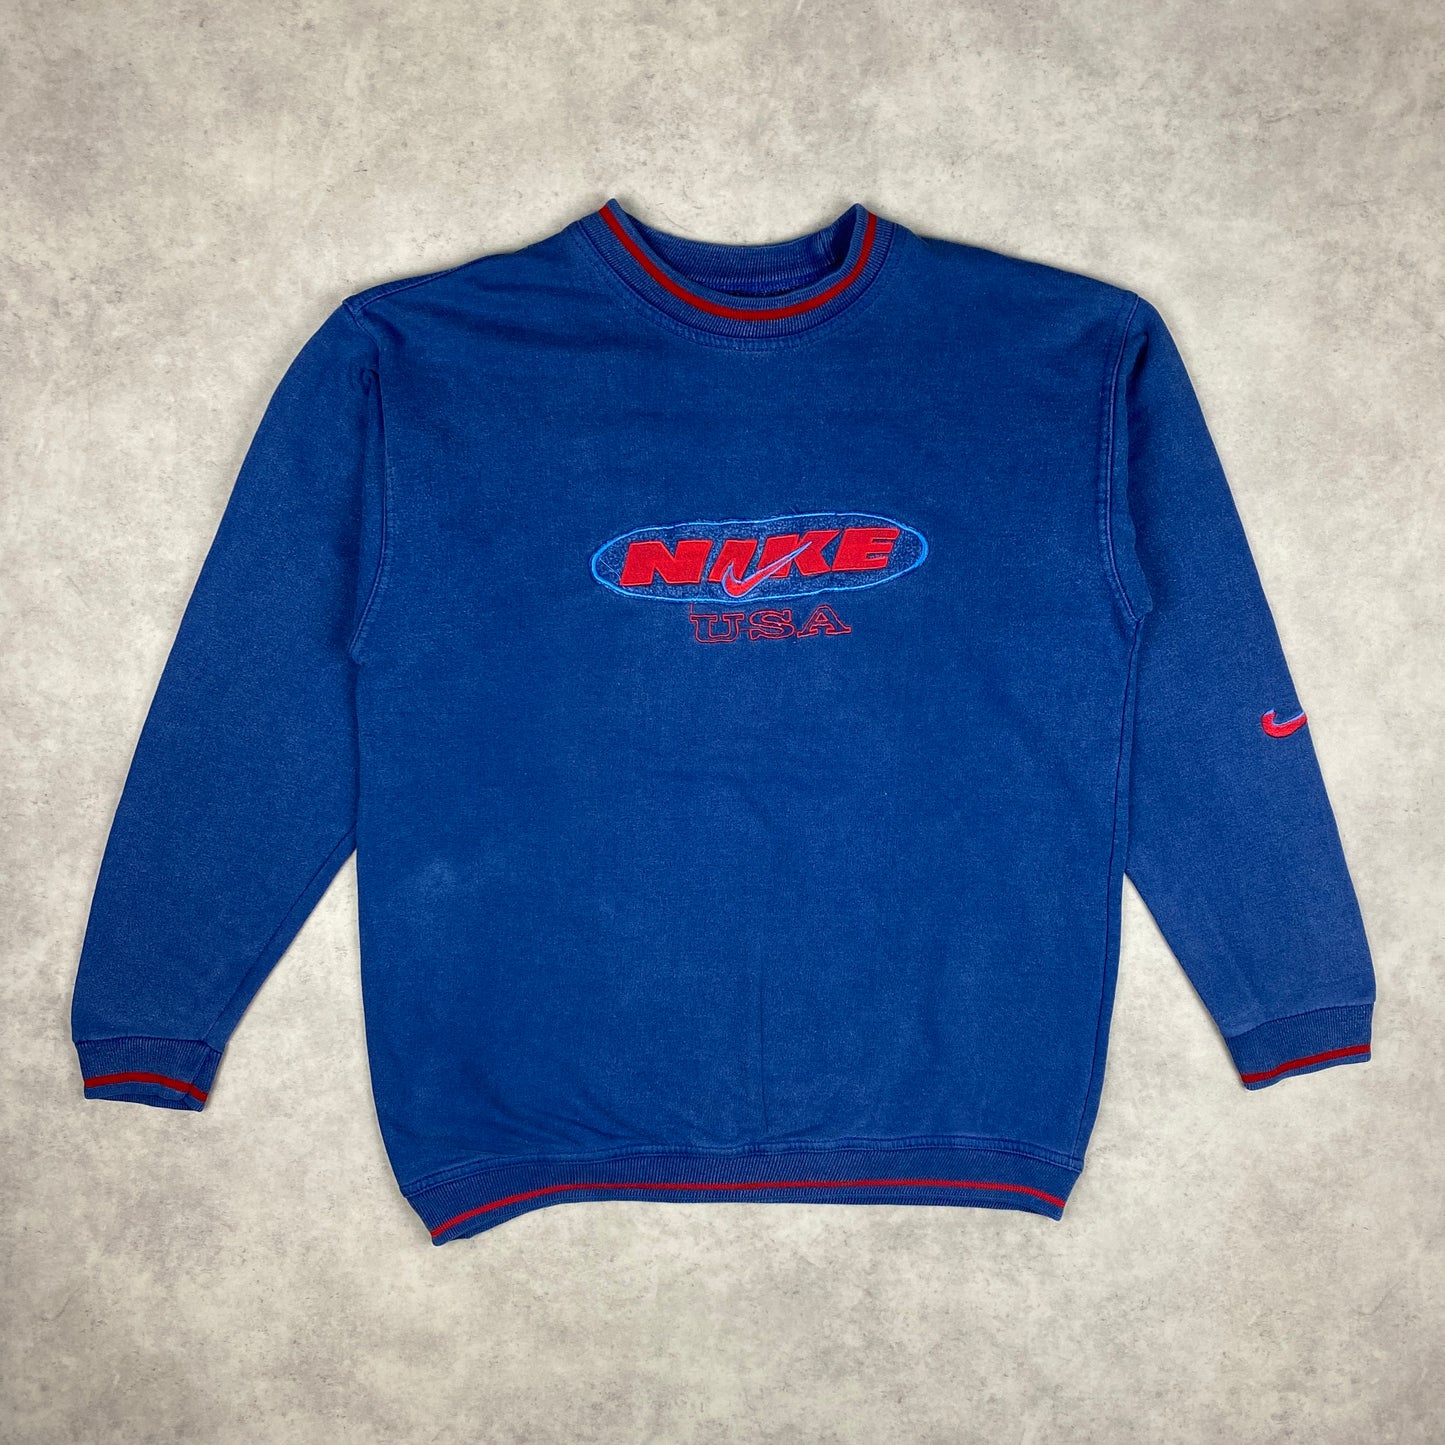 Nike RARE USA heavyweight sweater (M-L)